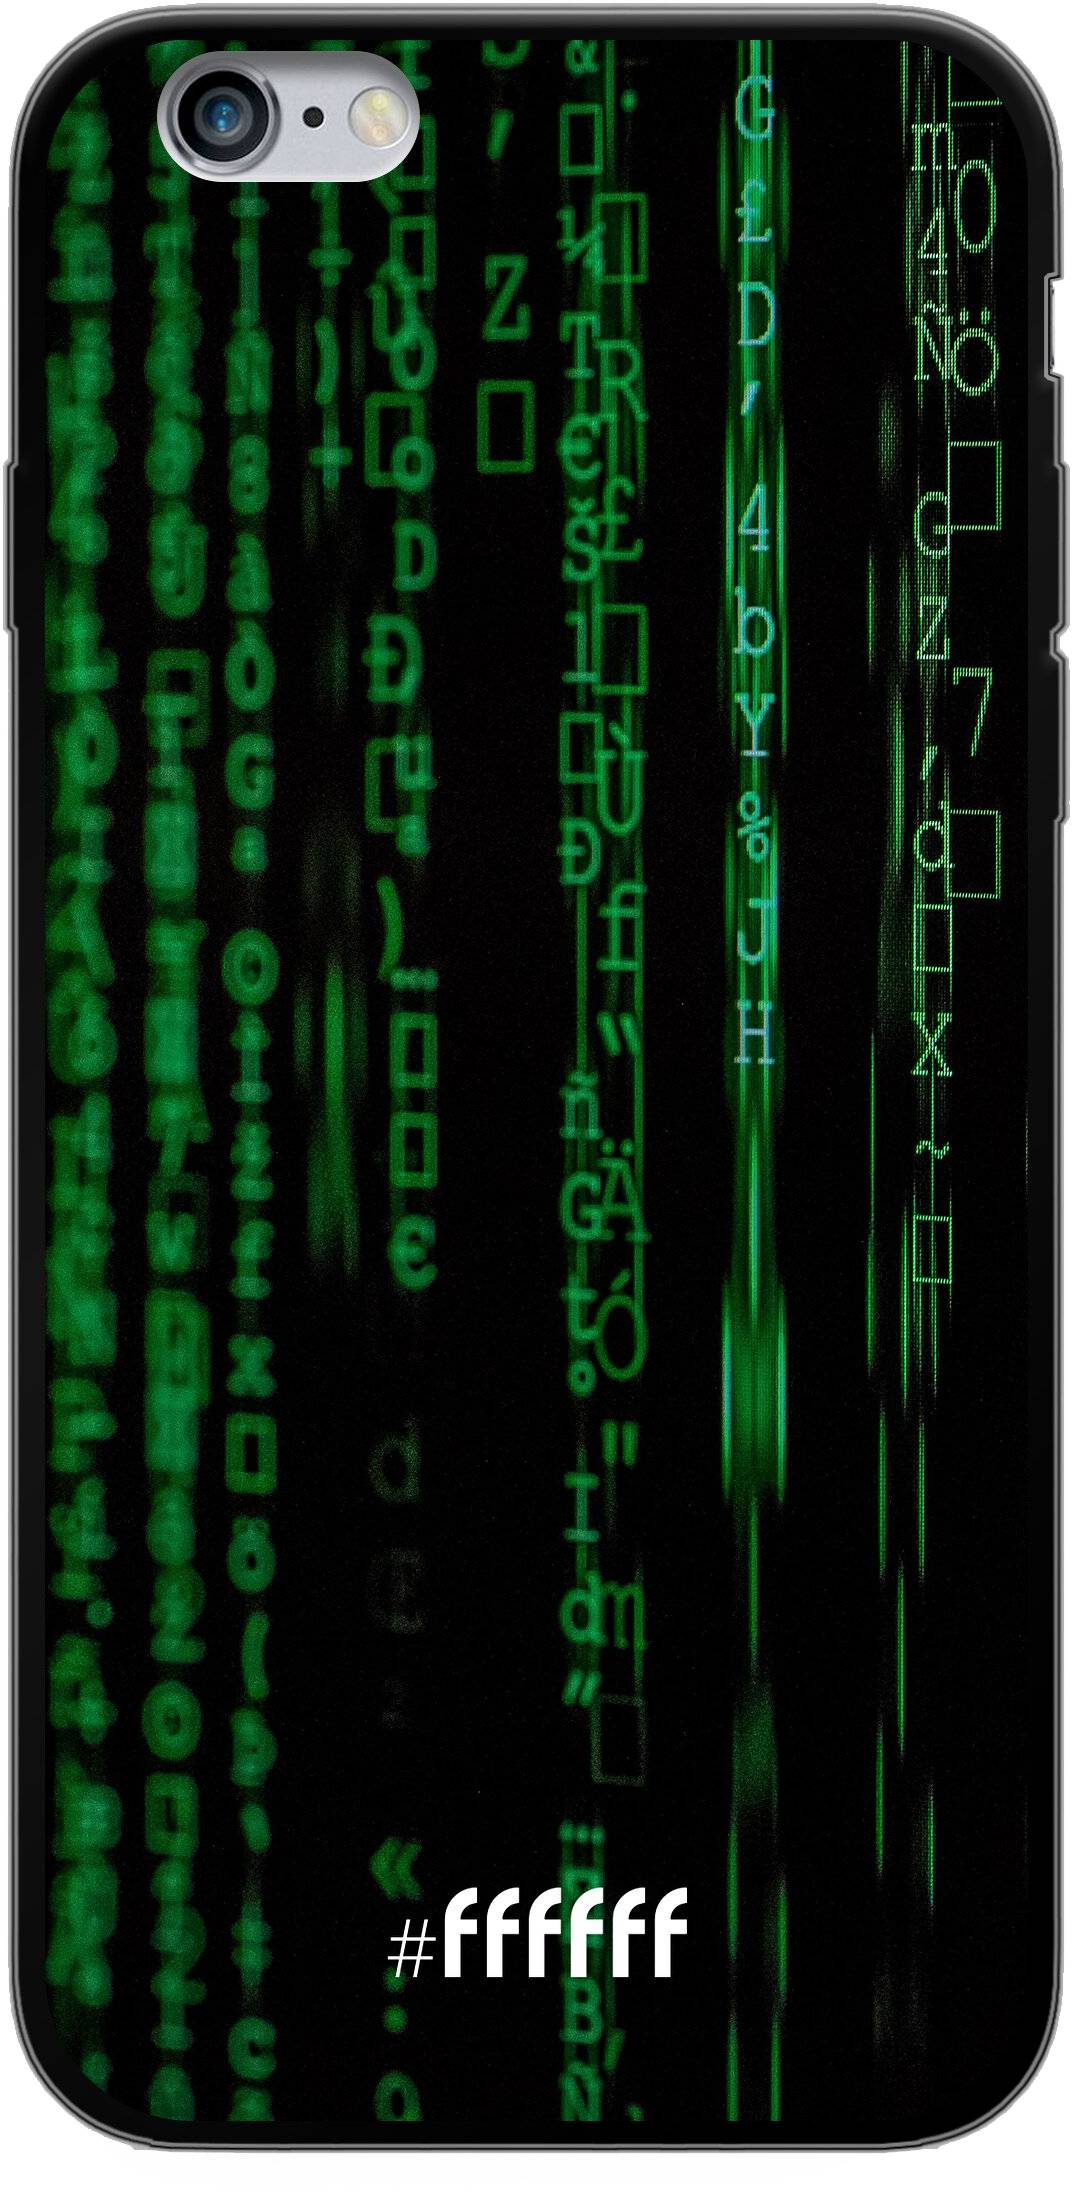 Hacking The Matrix iPhone 6